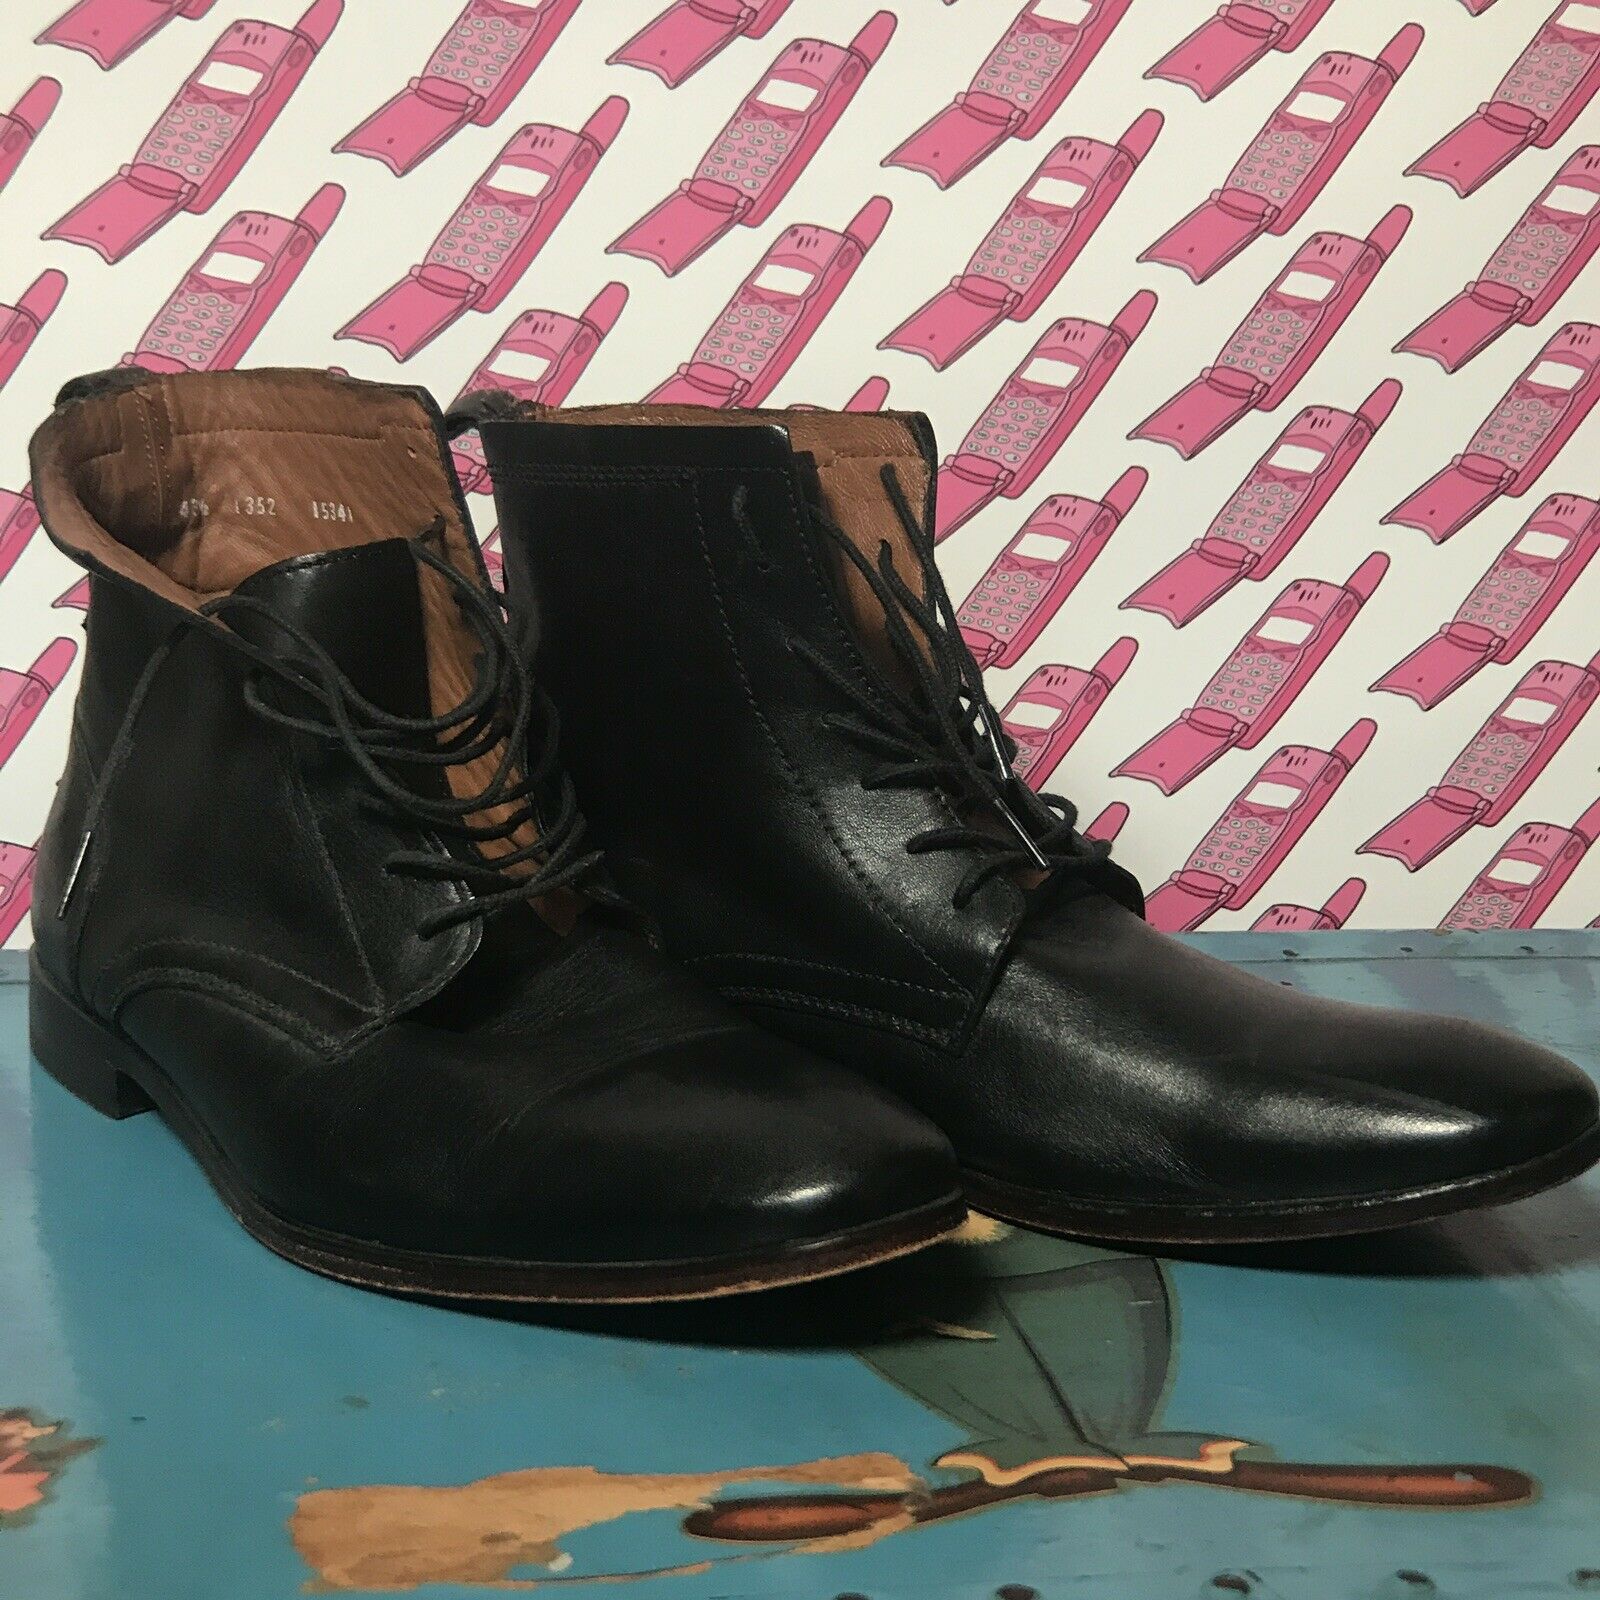 Aldo High Top Black Leather Dress Shoes US Size 10 EU Size 43.5